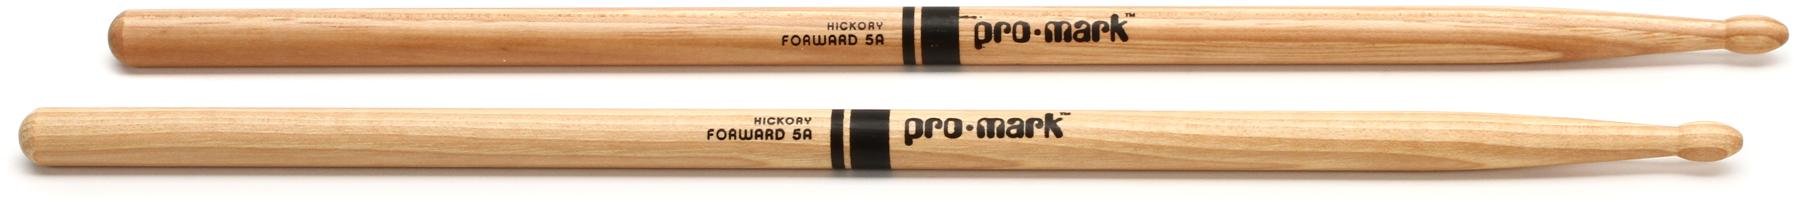 Promark Drumstick Size Chart